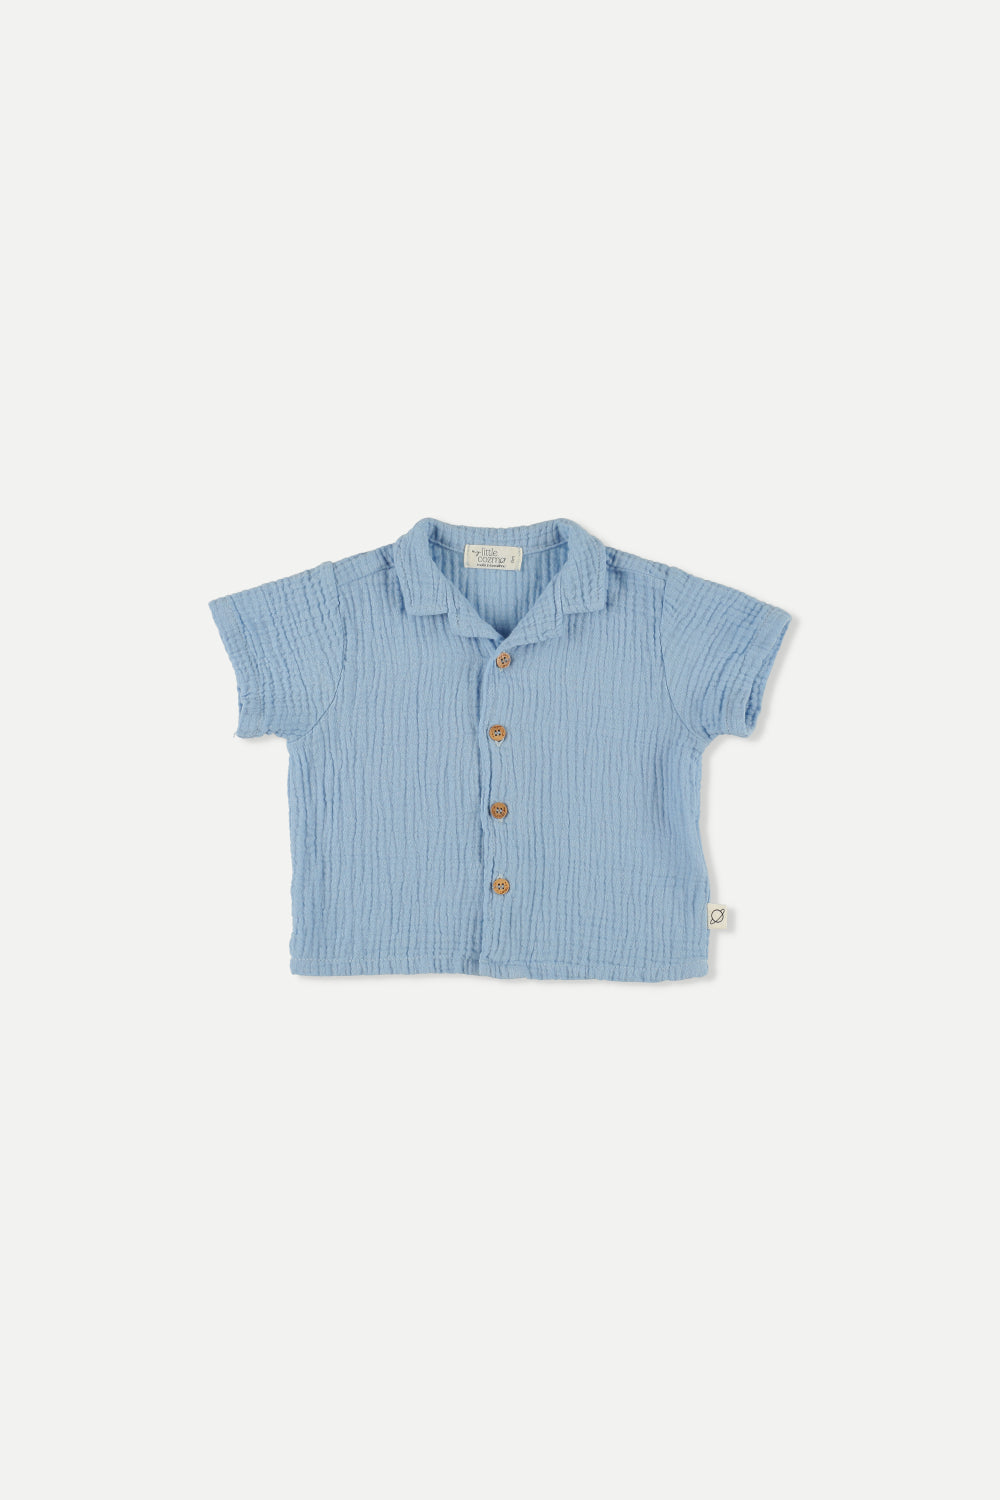 Shirt Baby Boy Pablo Blue - ملابس